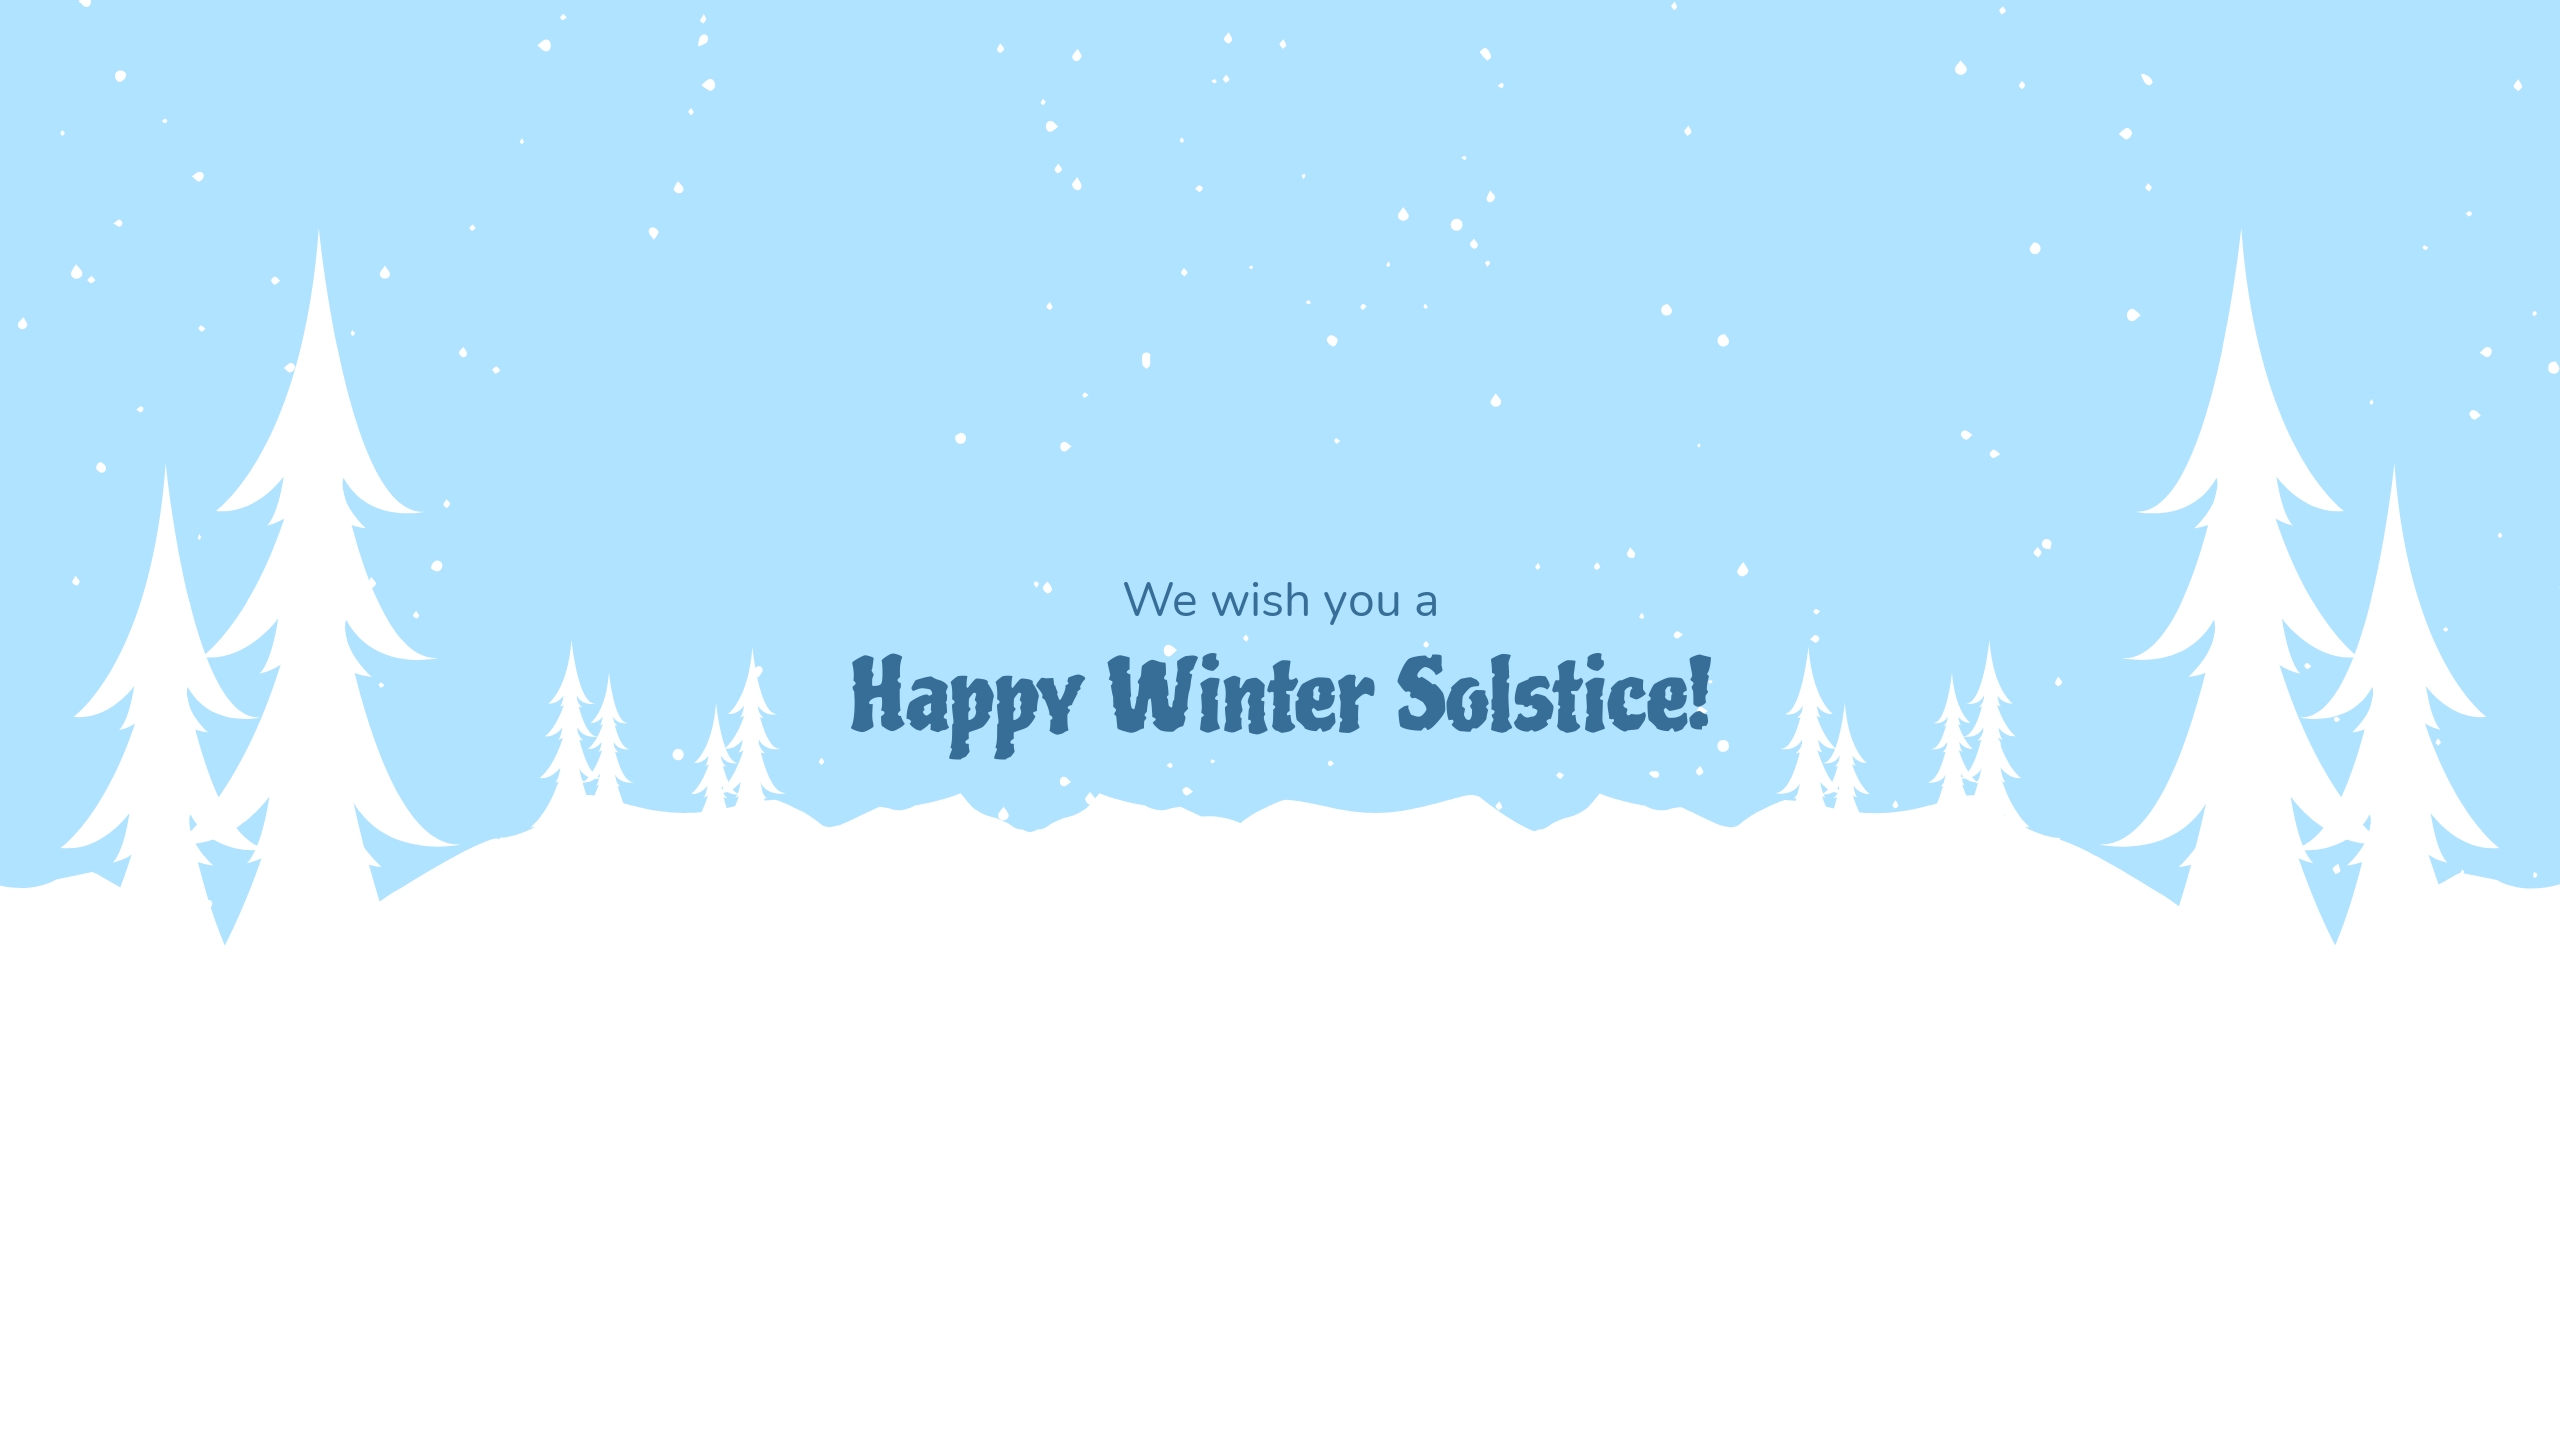 Winter Solstice Pictures  Download Free Images on Unsplash